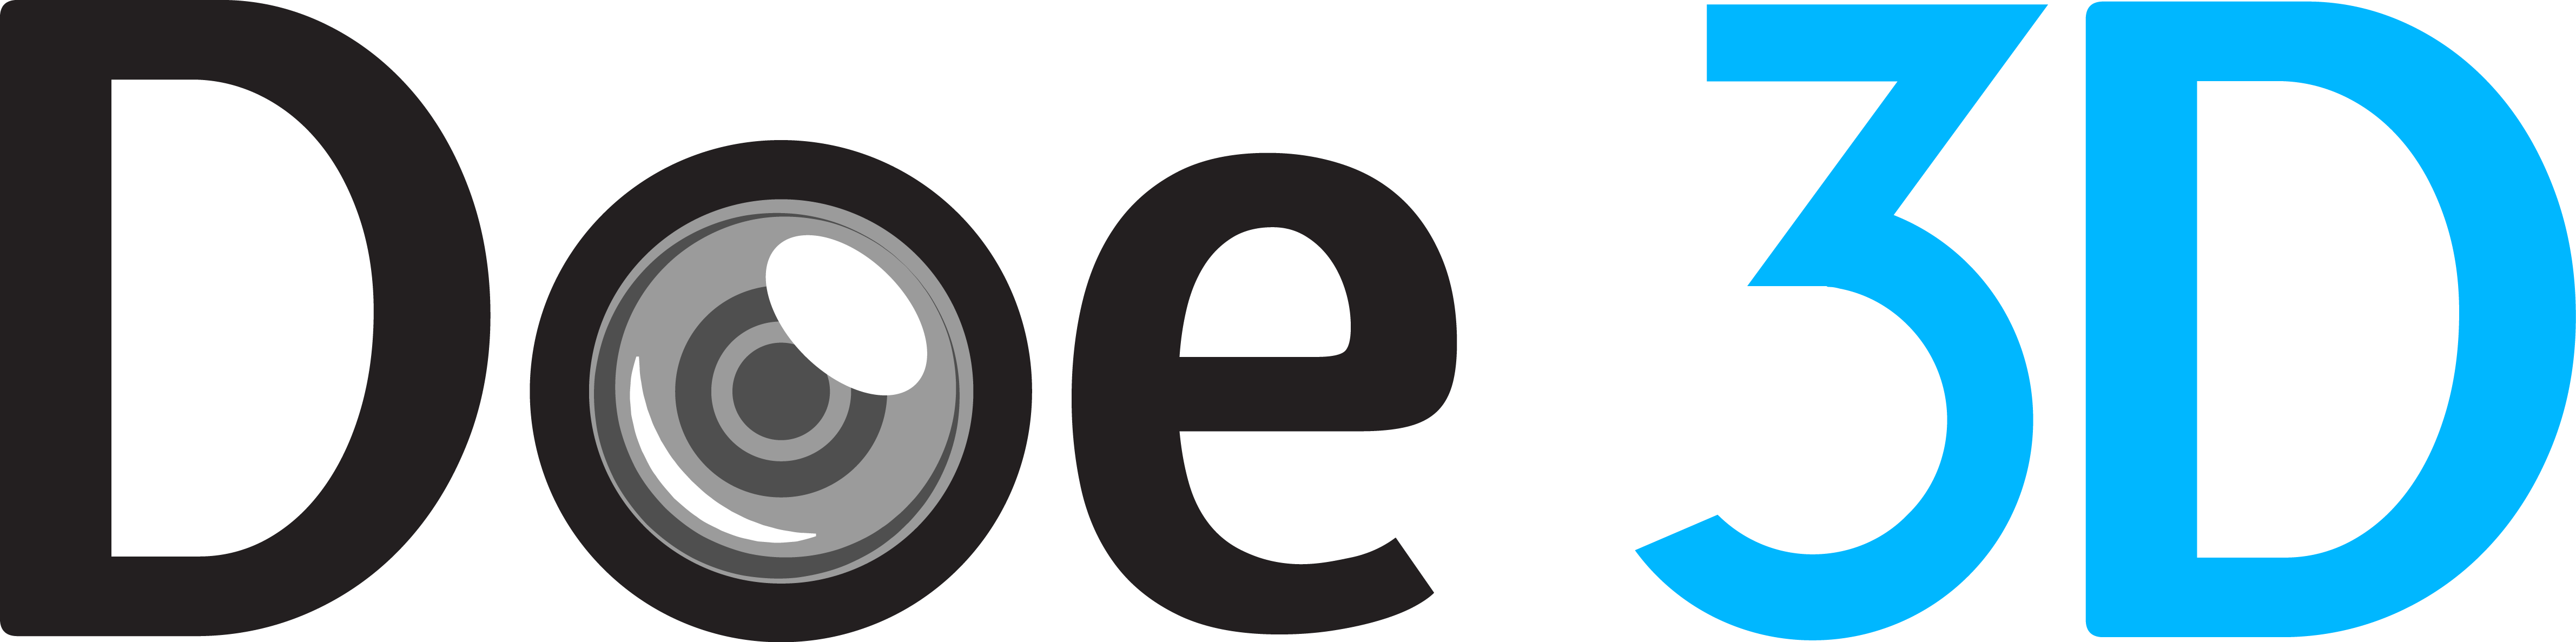 Logo-Sans-fond-600px